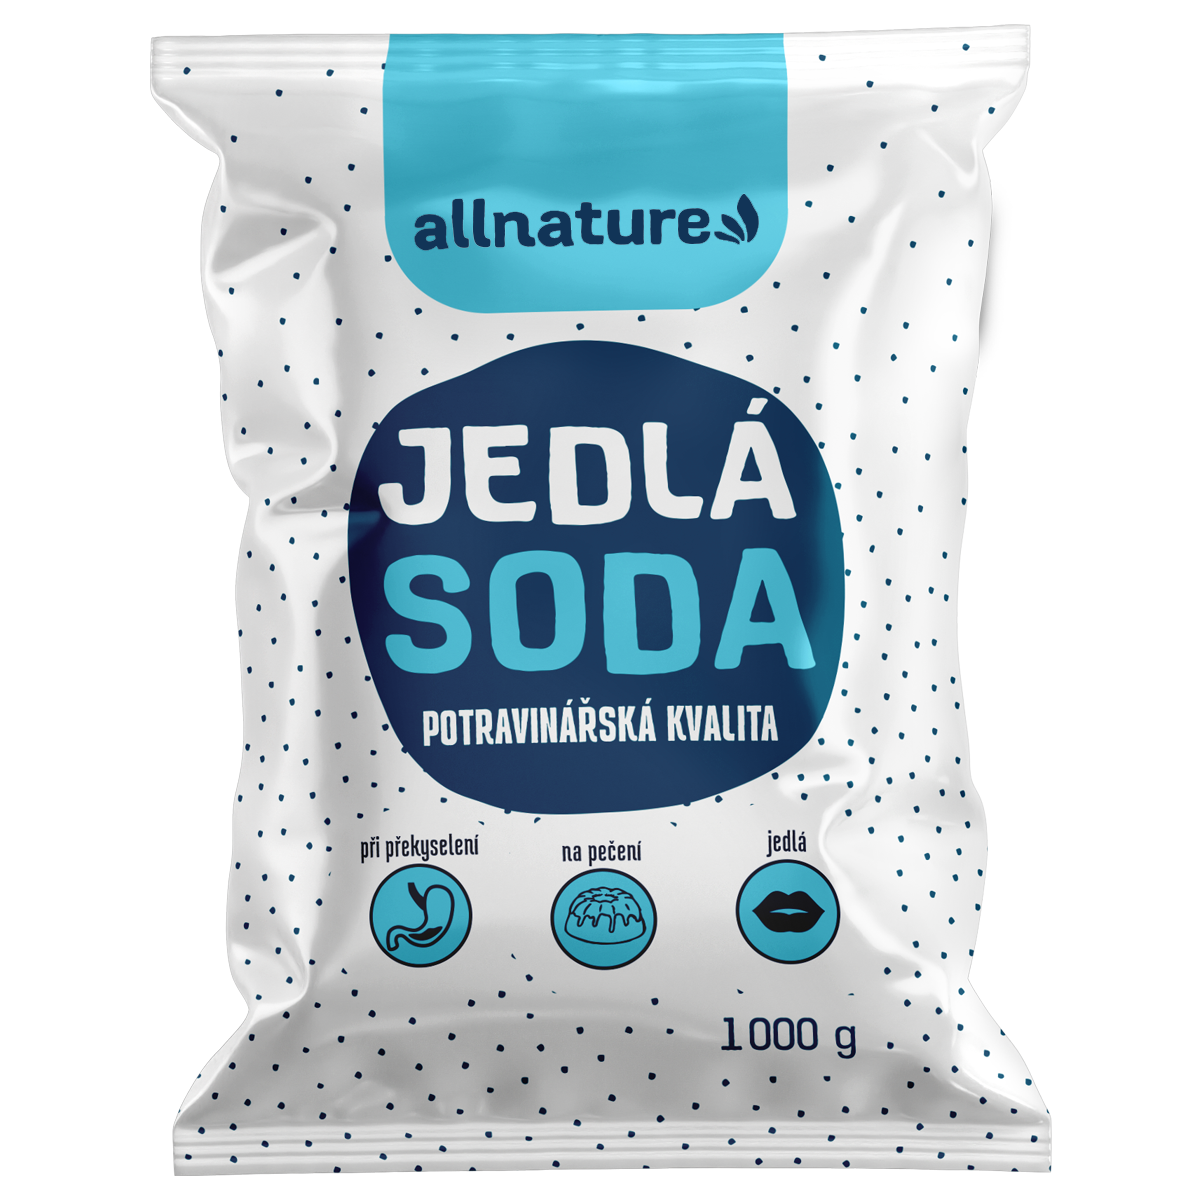 Allnature Jedlá soda - II. jakost 1 kg - potravinářská kvalita Allnature